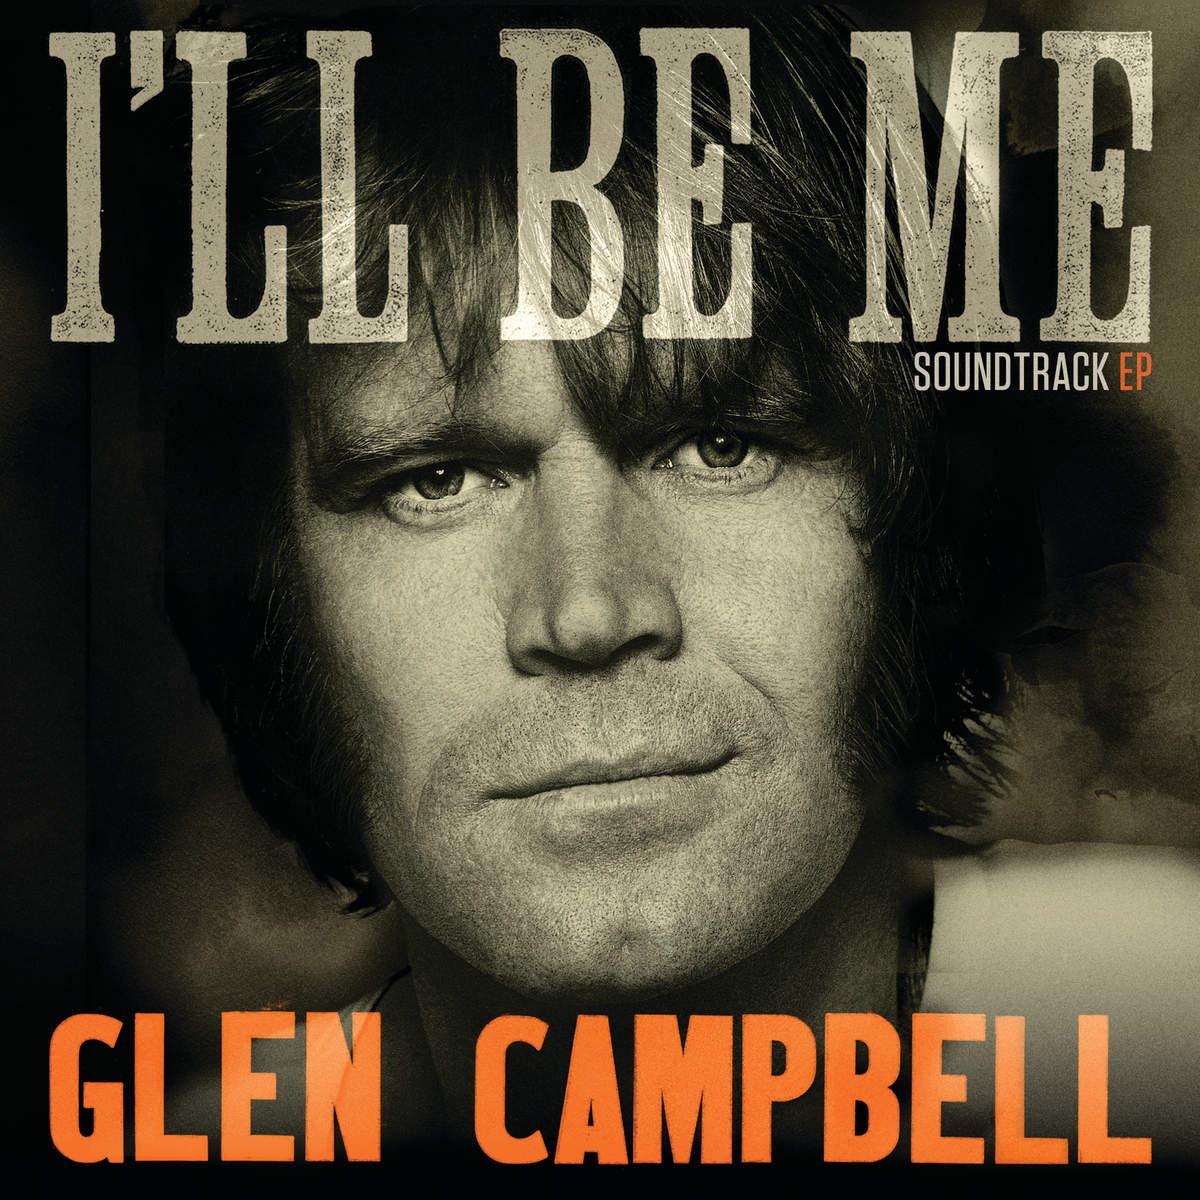 Glen Campbell I'll Be Me Soundtrack EP